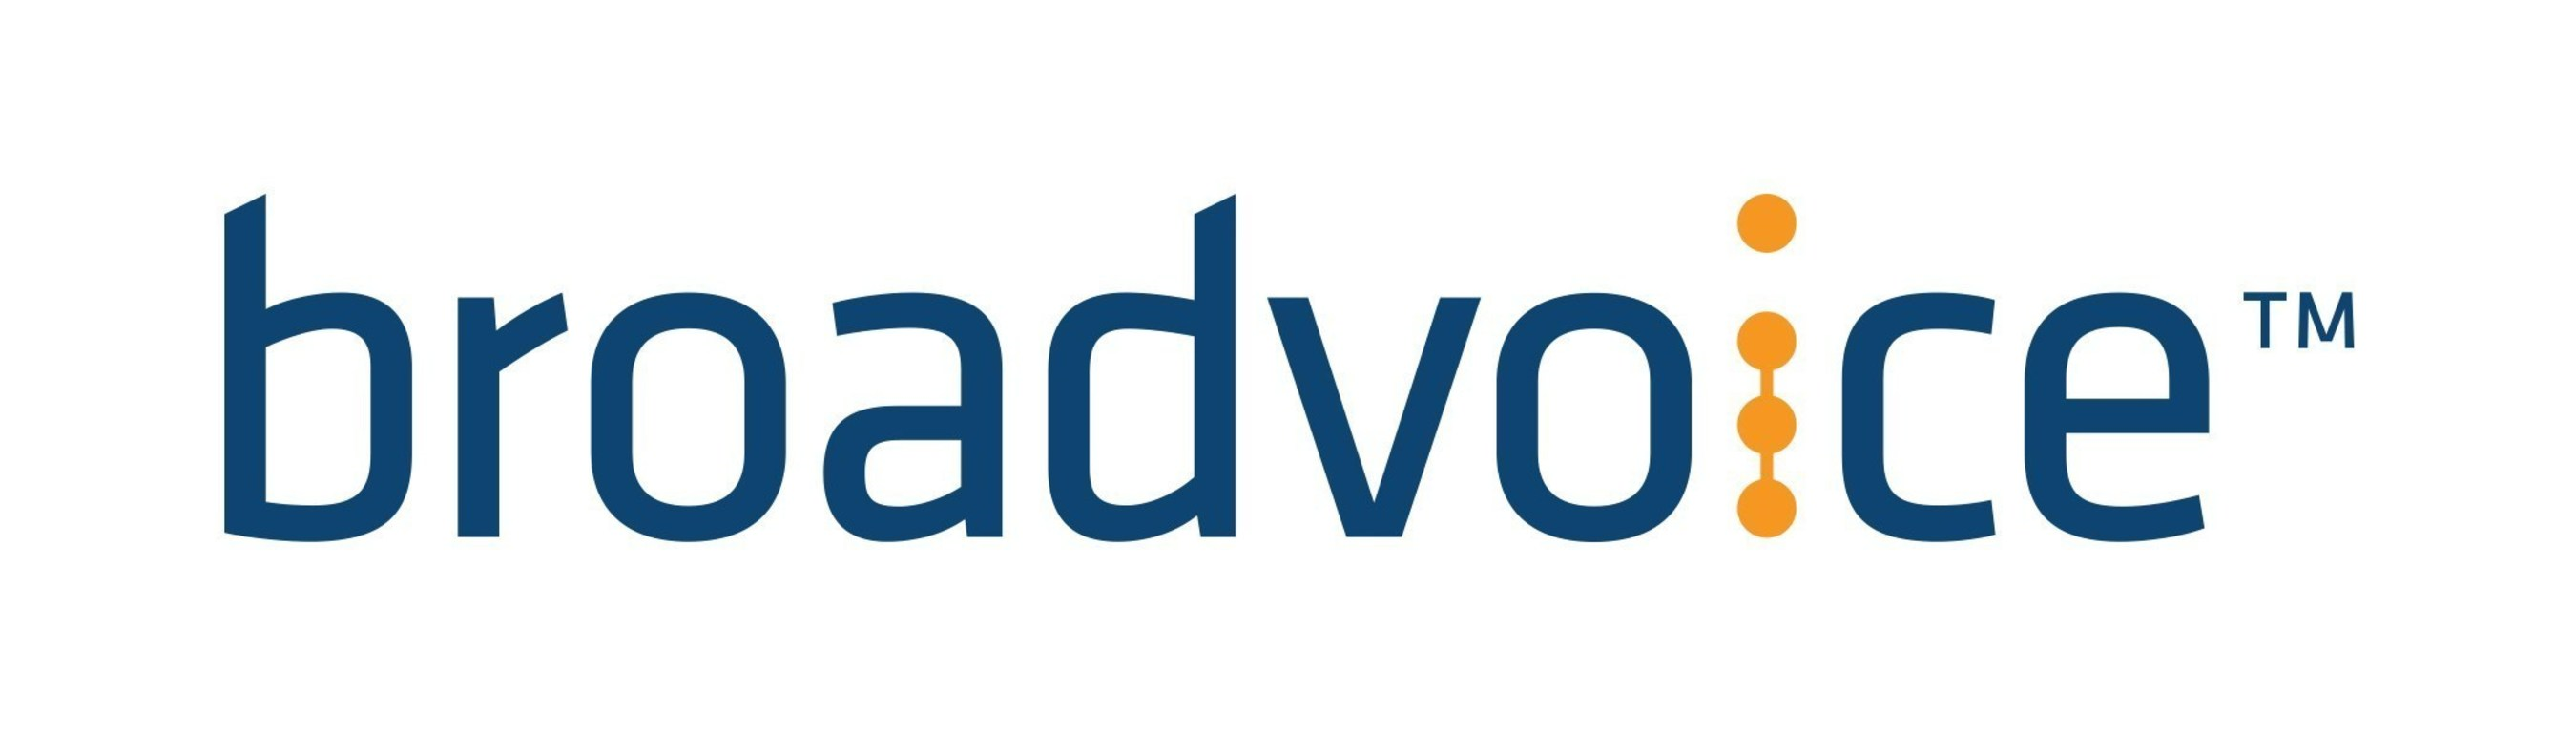 Broadvoice logo-2